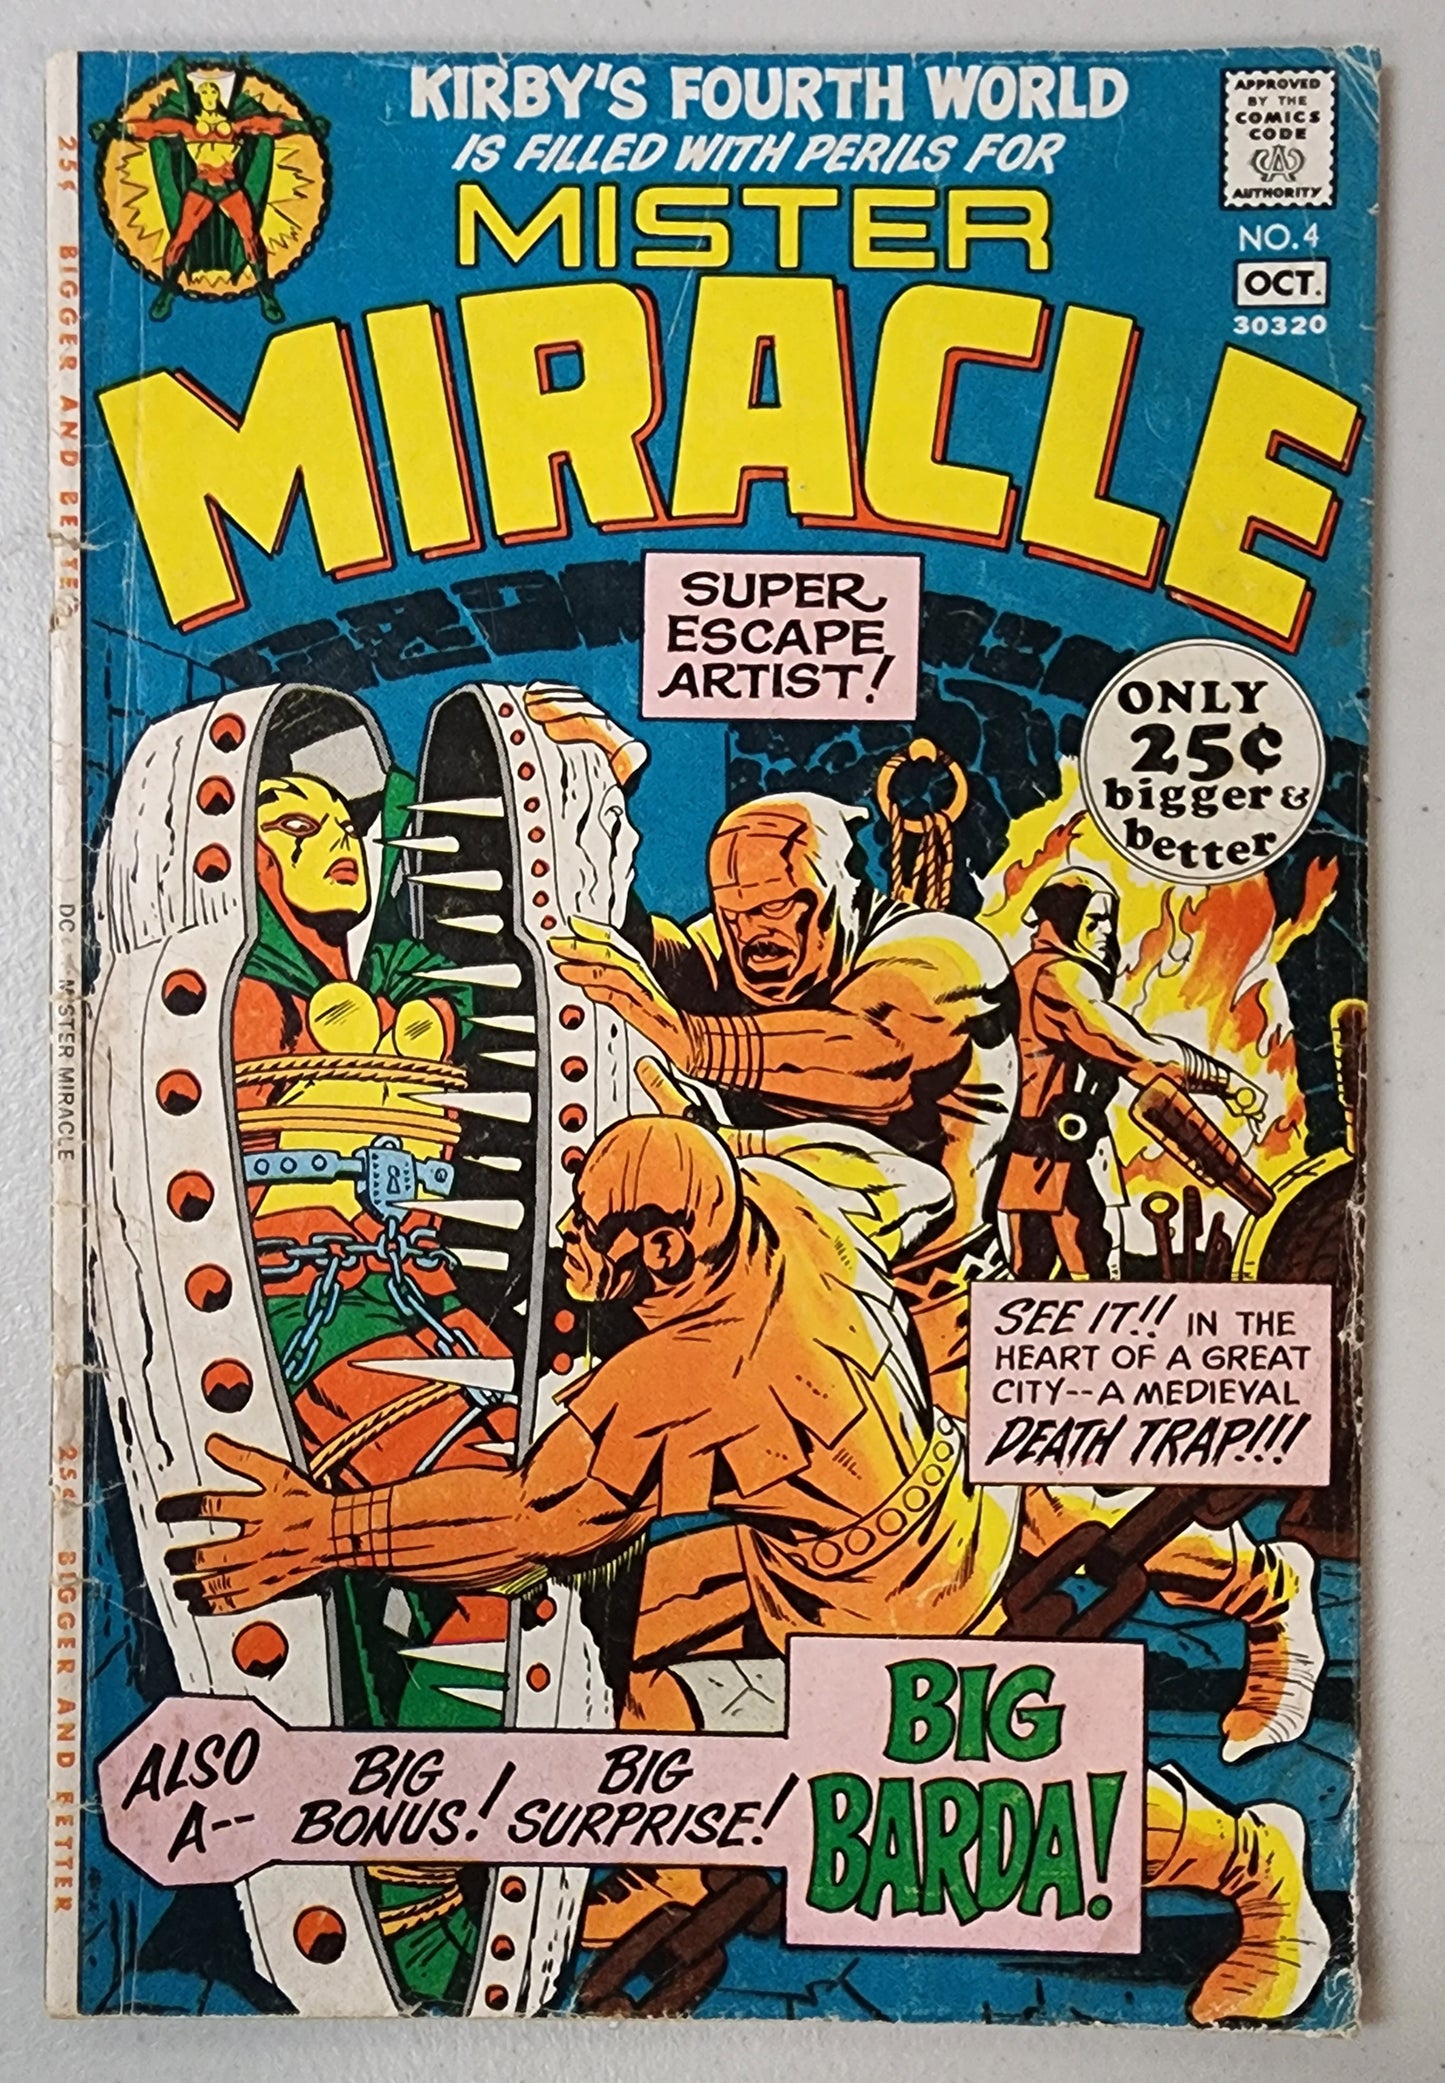 MISTER MIRACLE #4 (1ST APP BIG BARDA) 1971